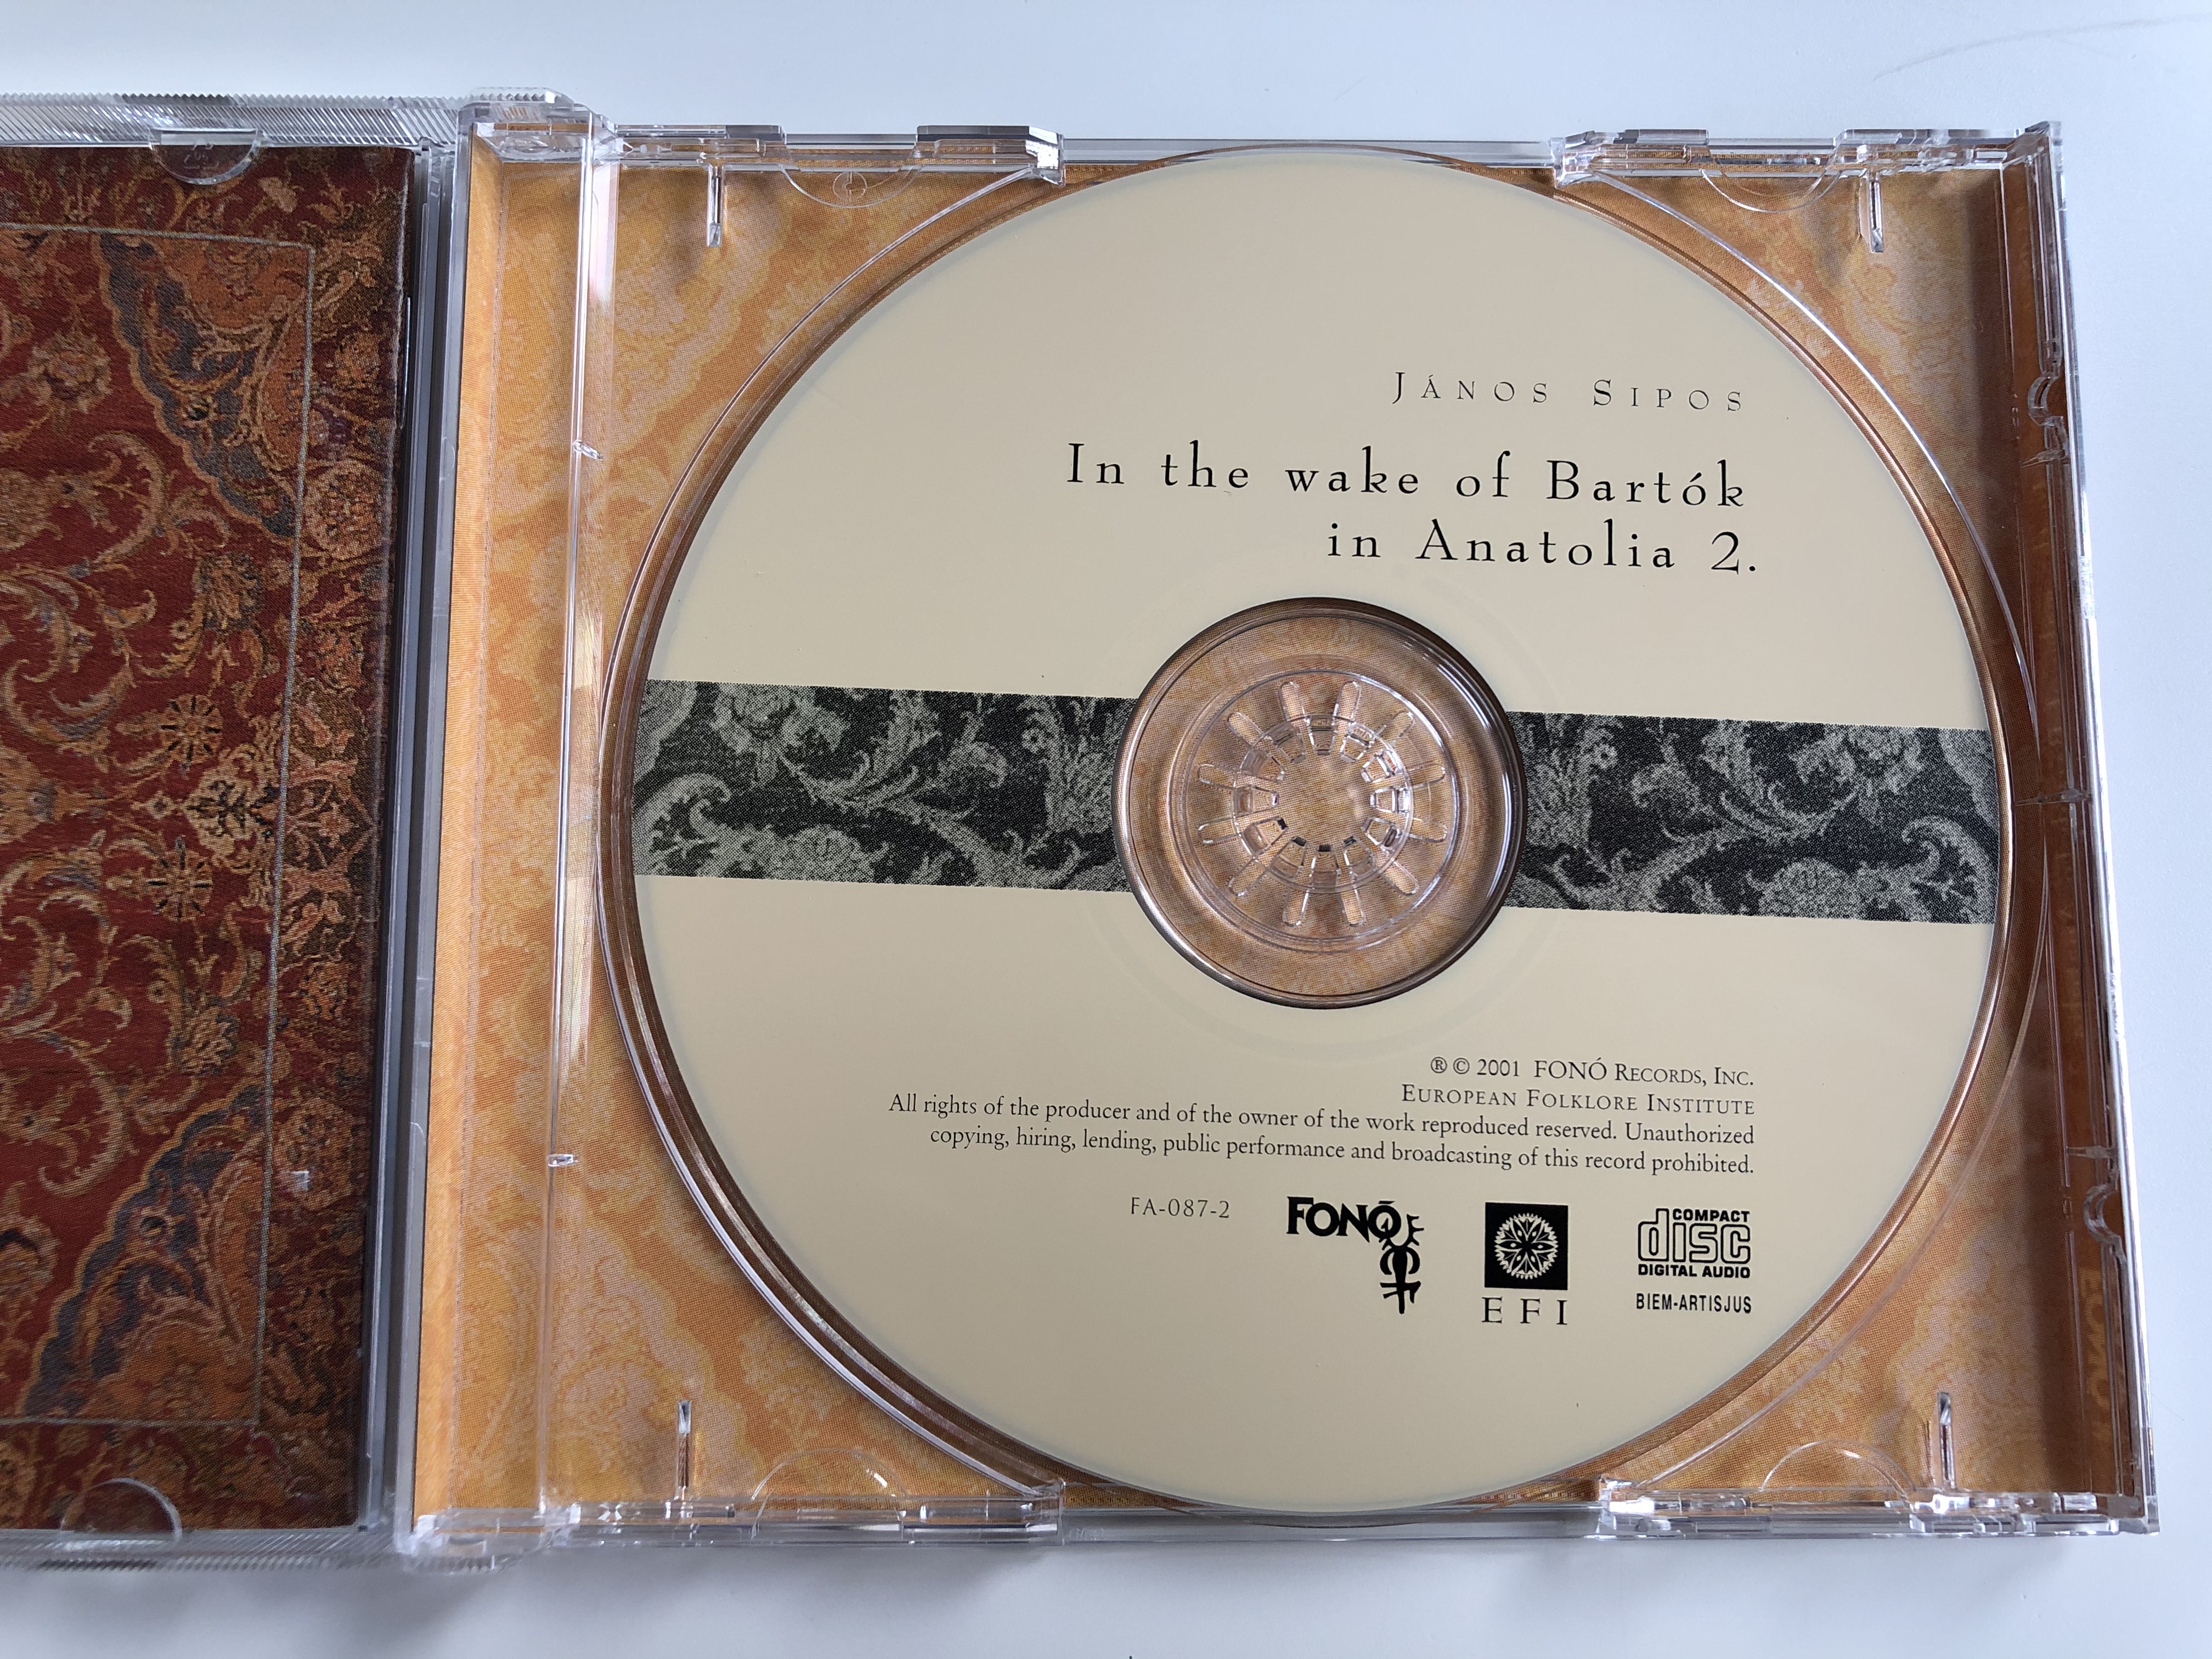 j-nos-sipos-in-the-wake-of-bart-k-in-anatolia-2.-fon-records-audio-cd-2001-fa-087-2-8-.jpg